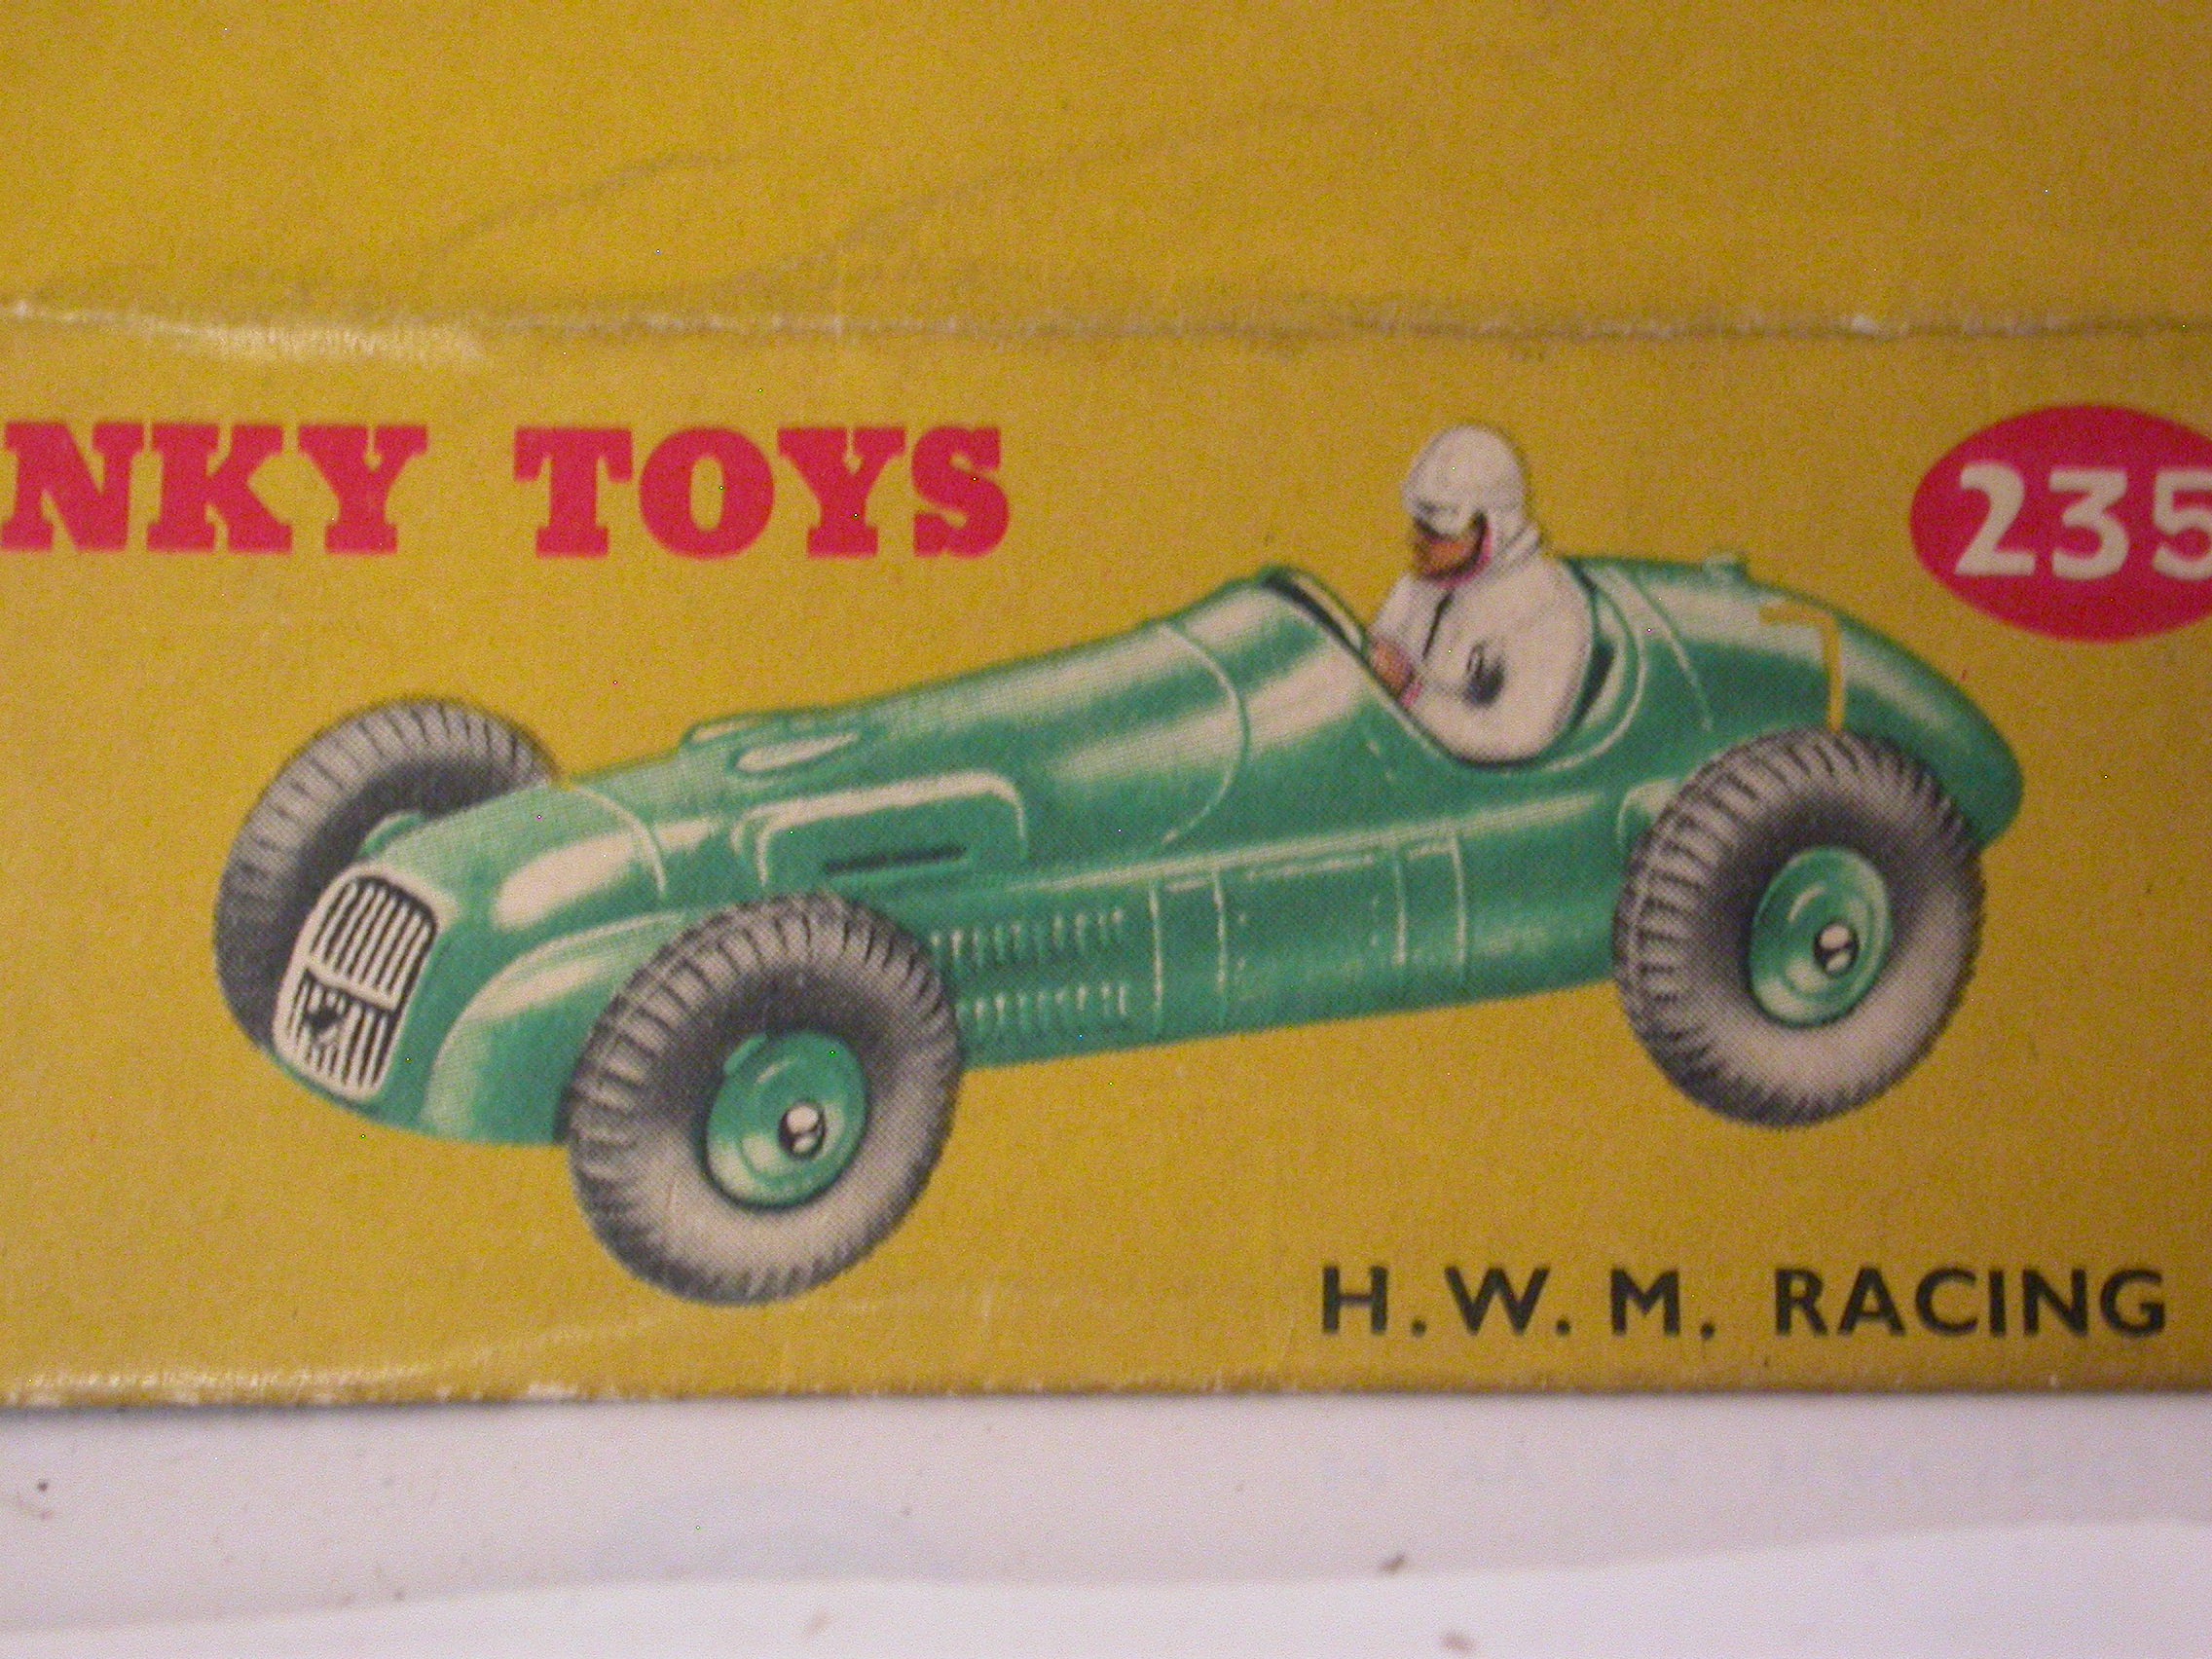 Dinky Toys GB Racing car